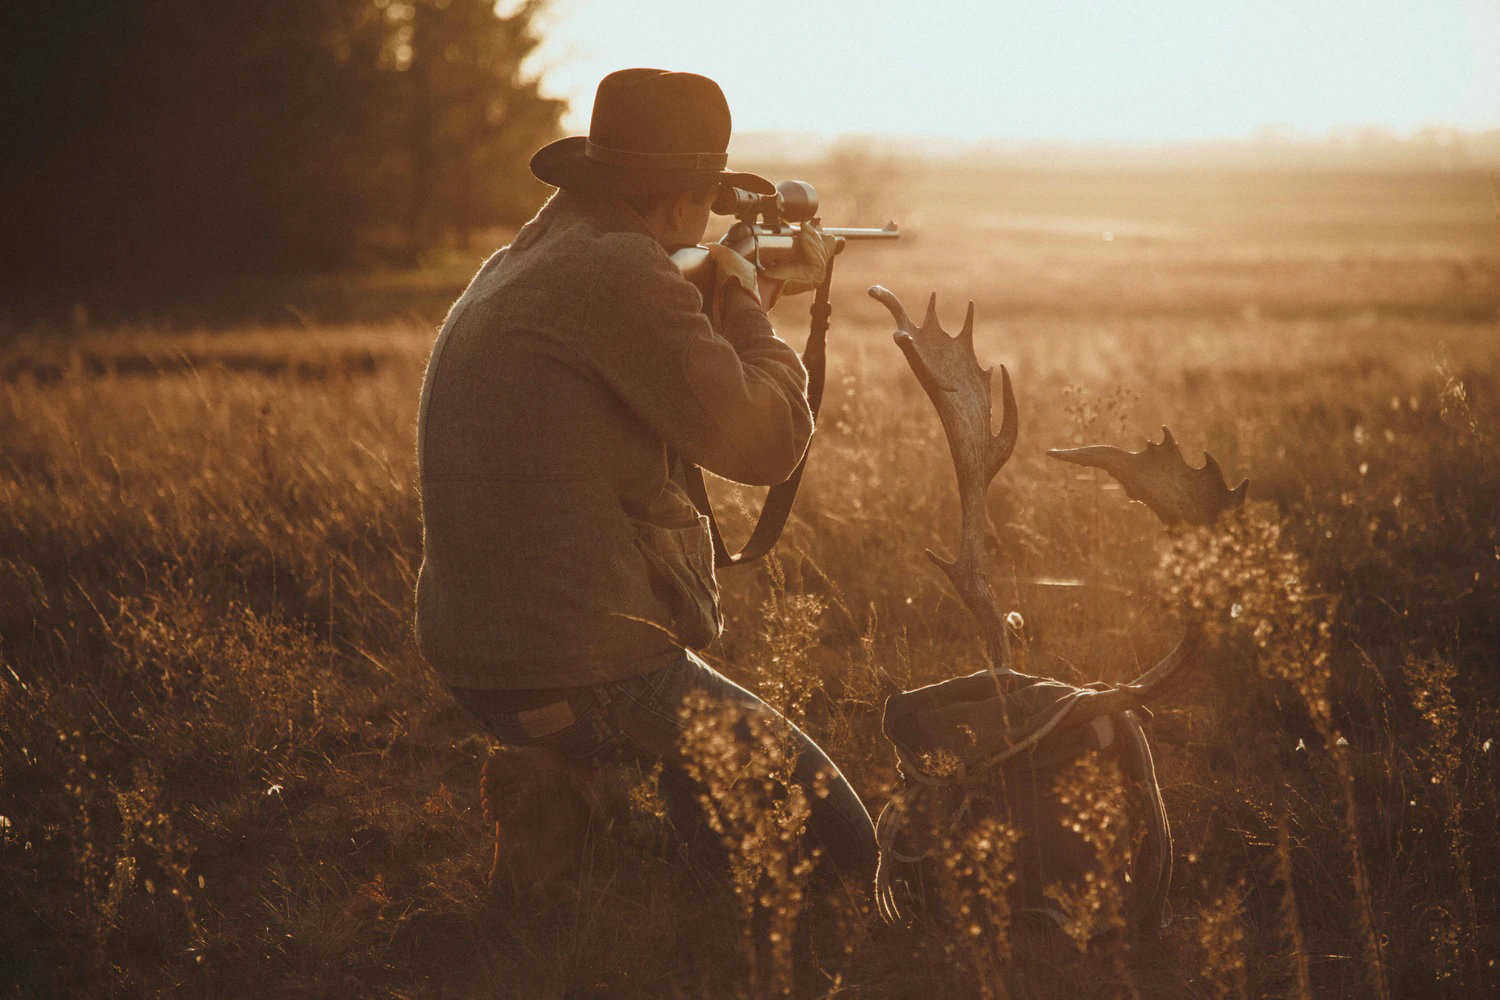 A hunter in a field with a gun